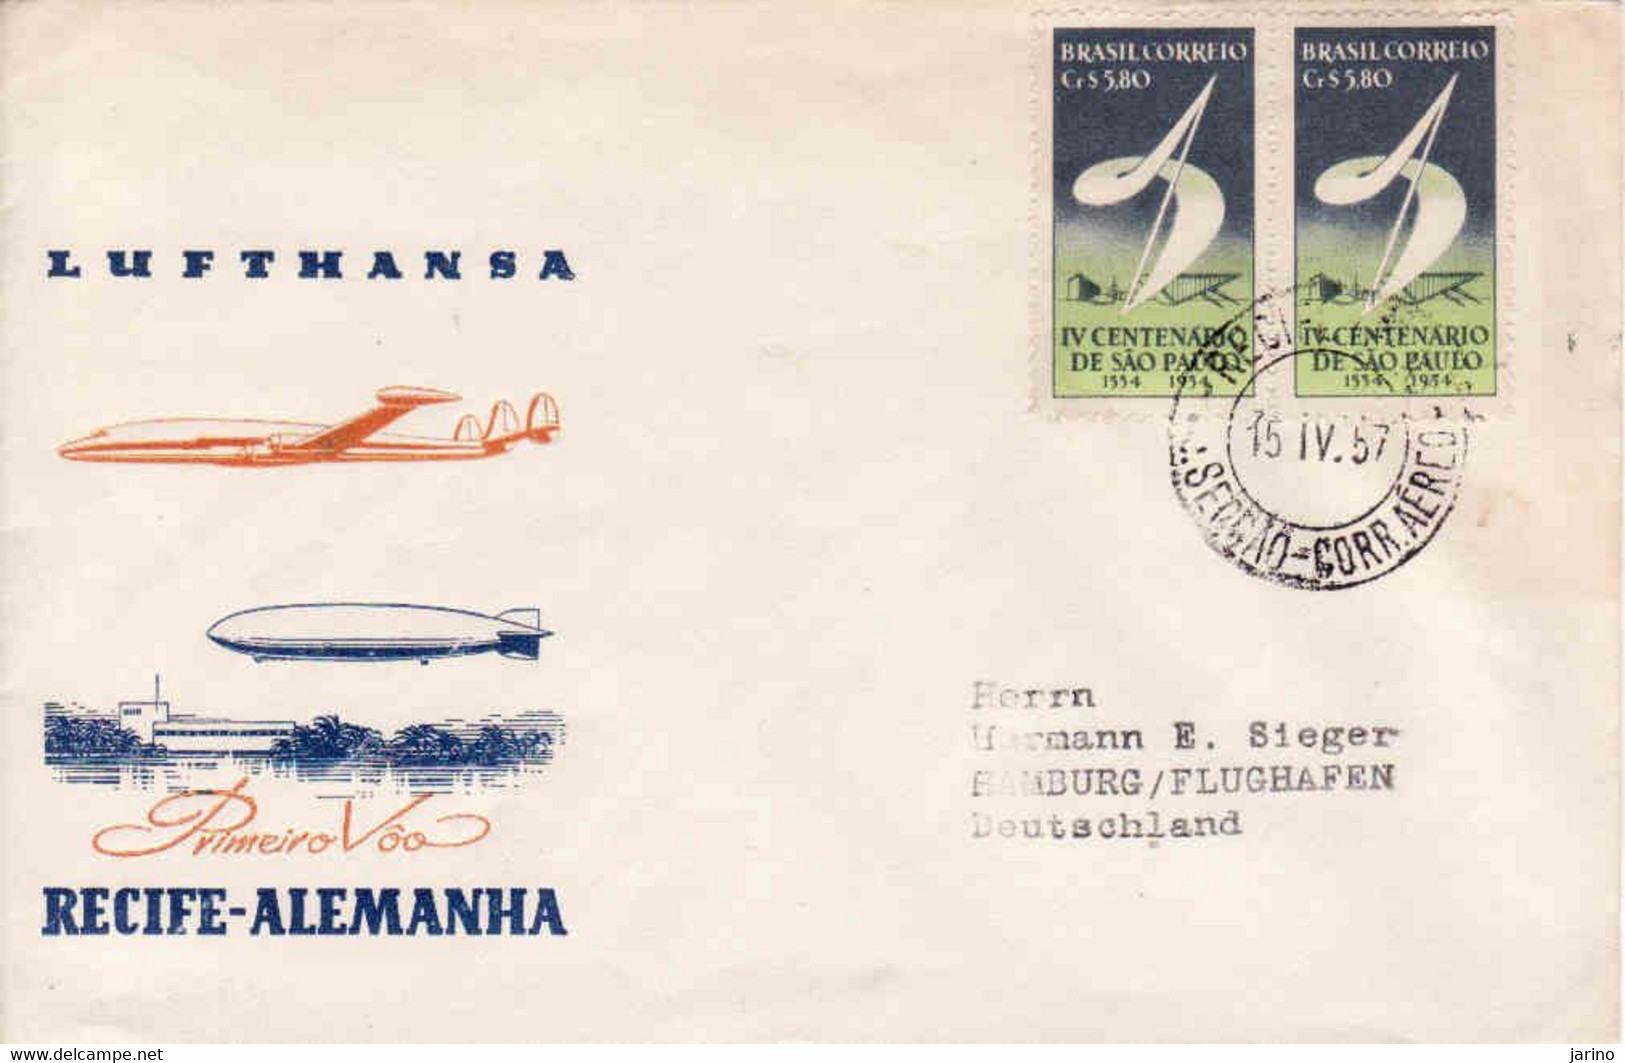 Brasilia 1957, Lufpost Lufthansa Firstflug Recife Alemania, Hamburg Flughafen - Airmail (Private Companies)